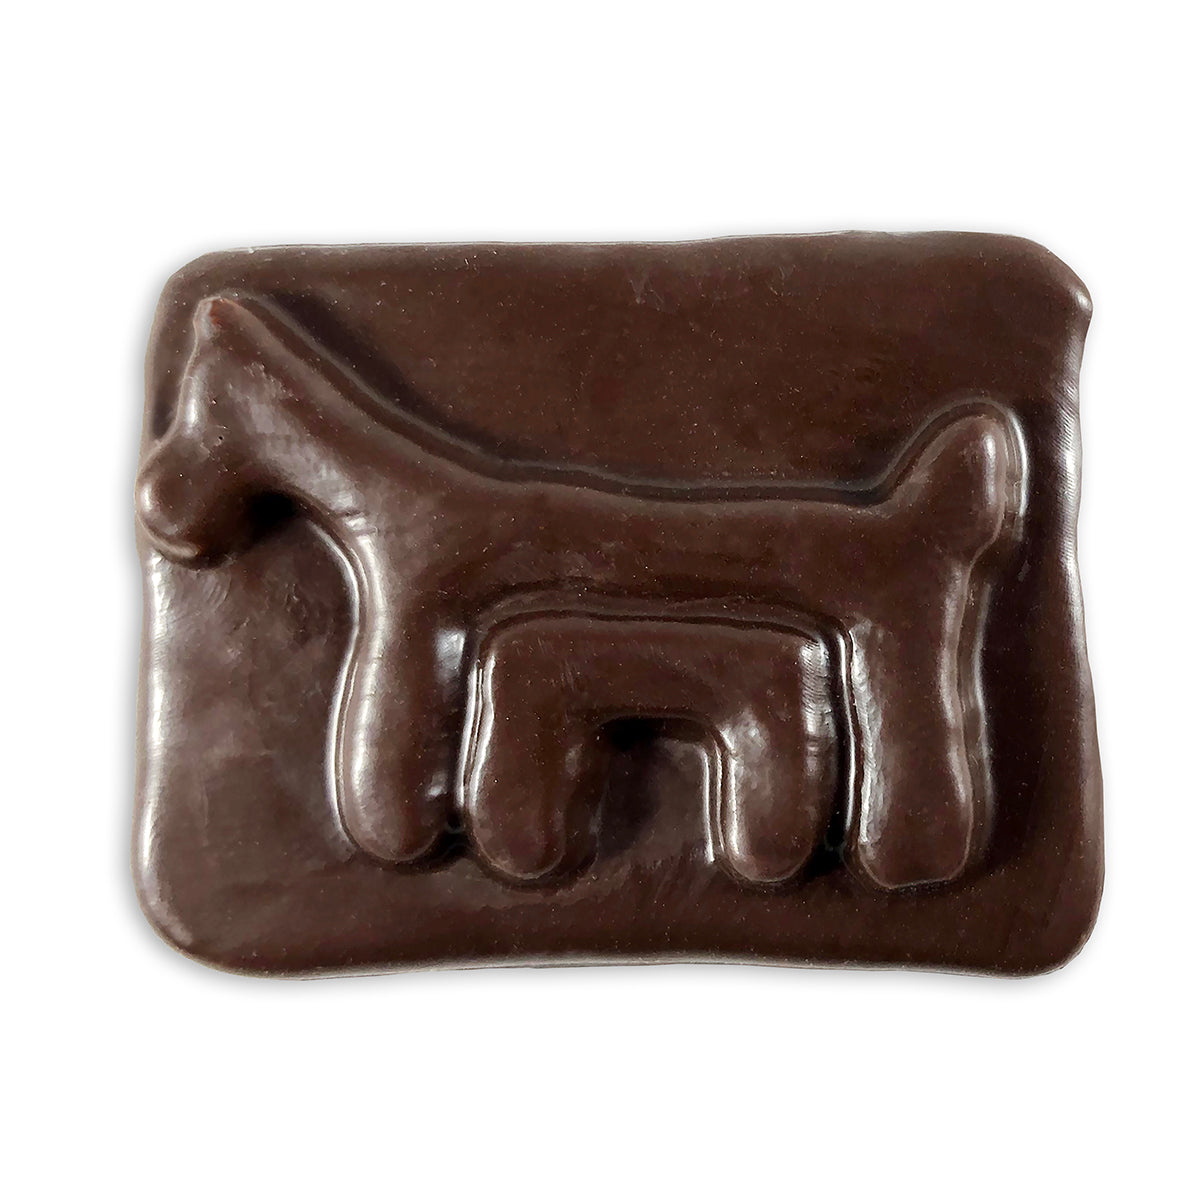 Horse chocolate sculpture (box of 12)